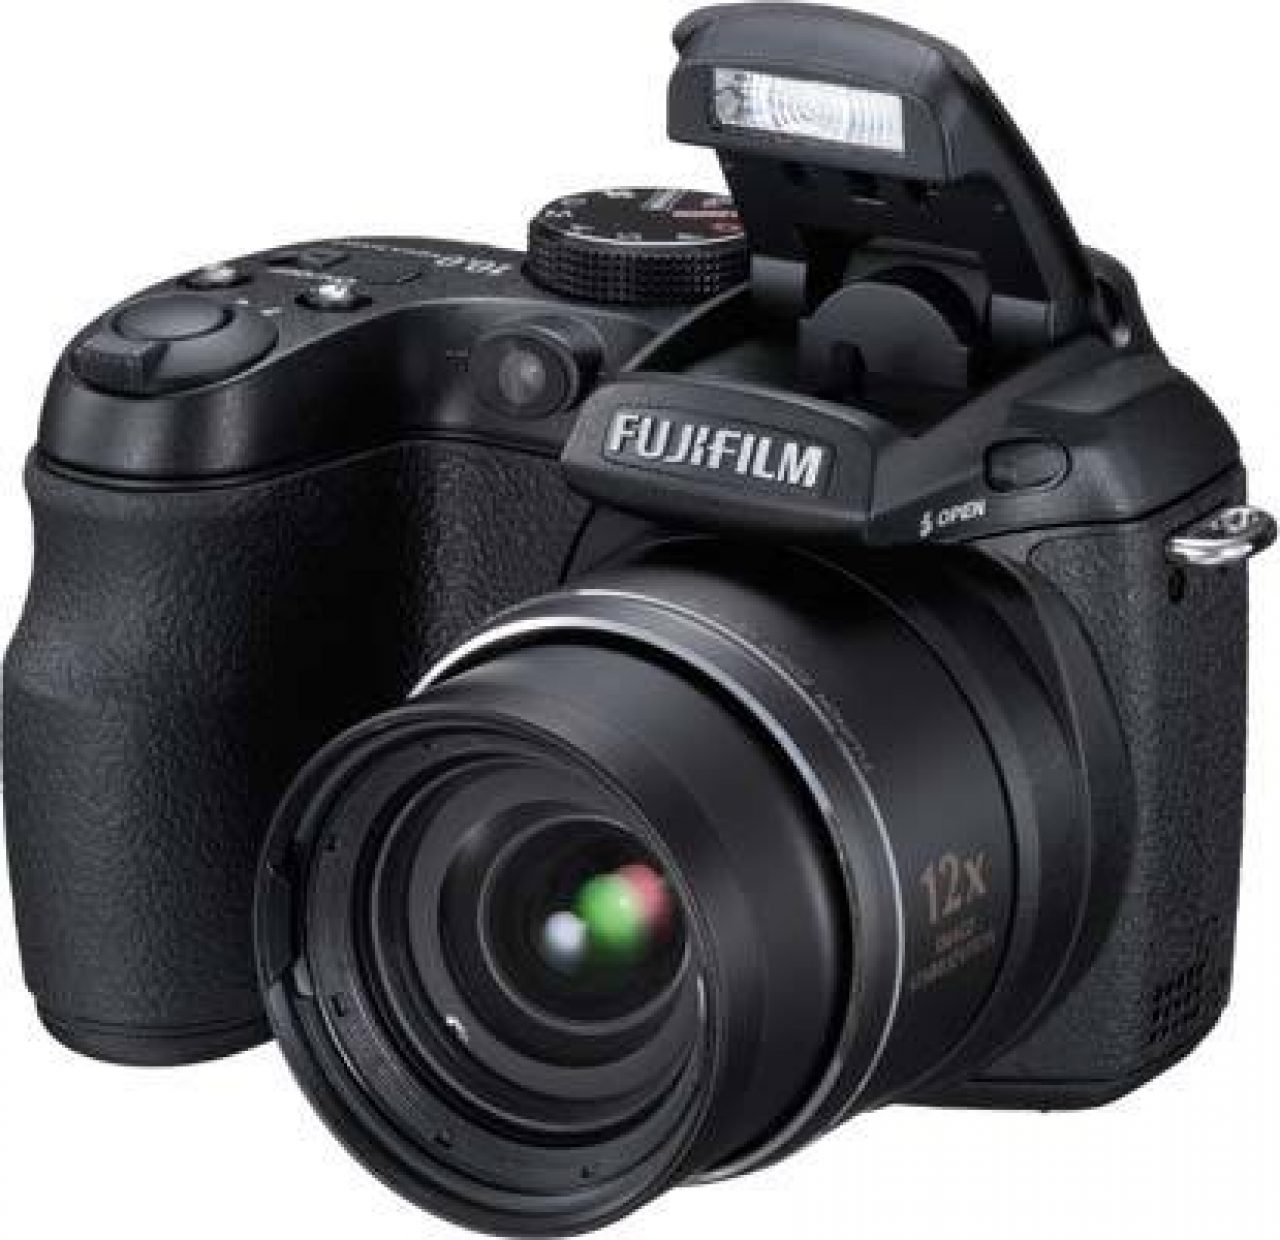 Fujifilm FinePix S1500 Review | Photography Blog